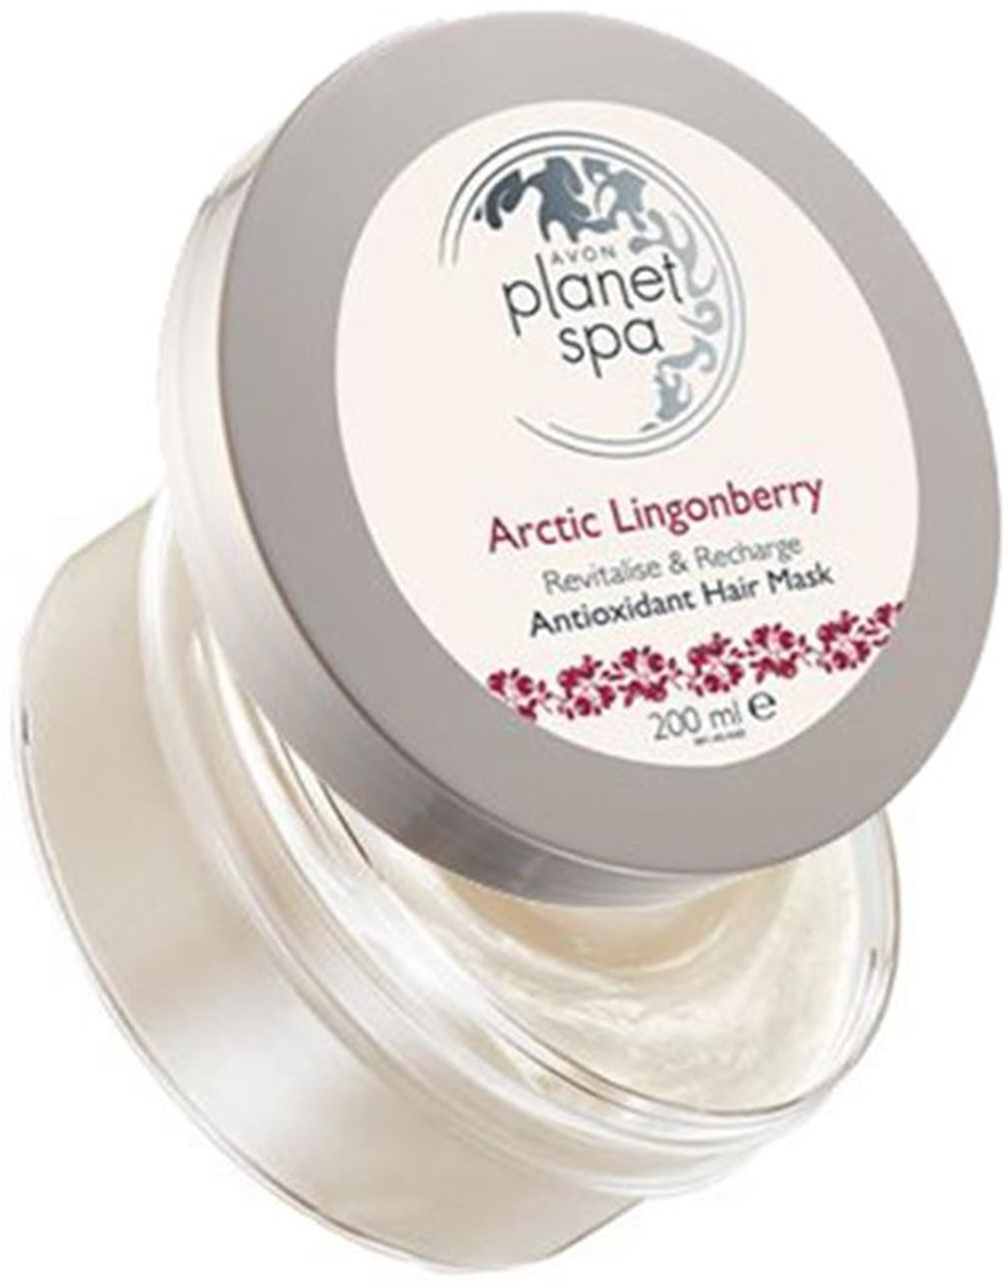 Avon Planet Spa Arctic Lingonberry Antioxidant Hair Mask - 200ml